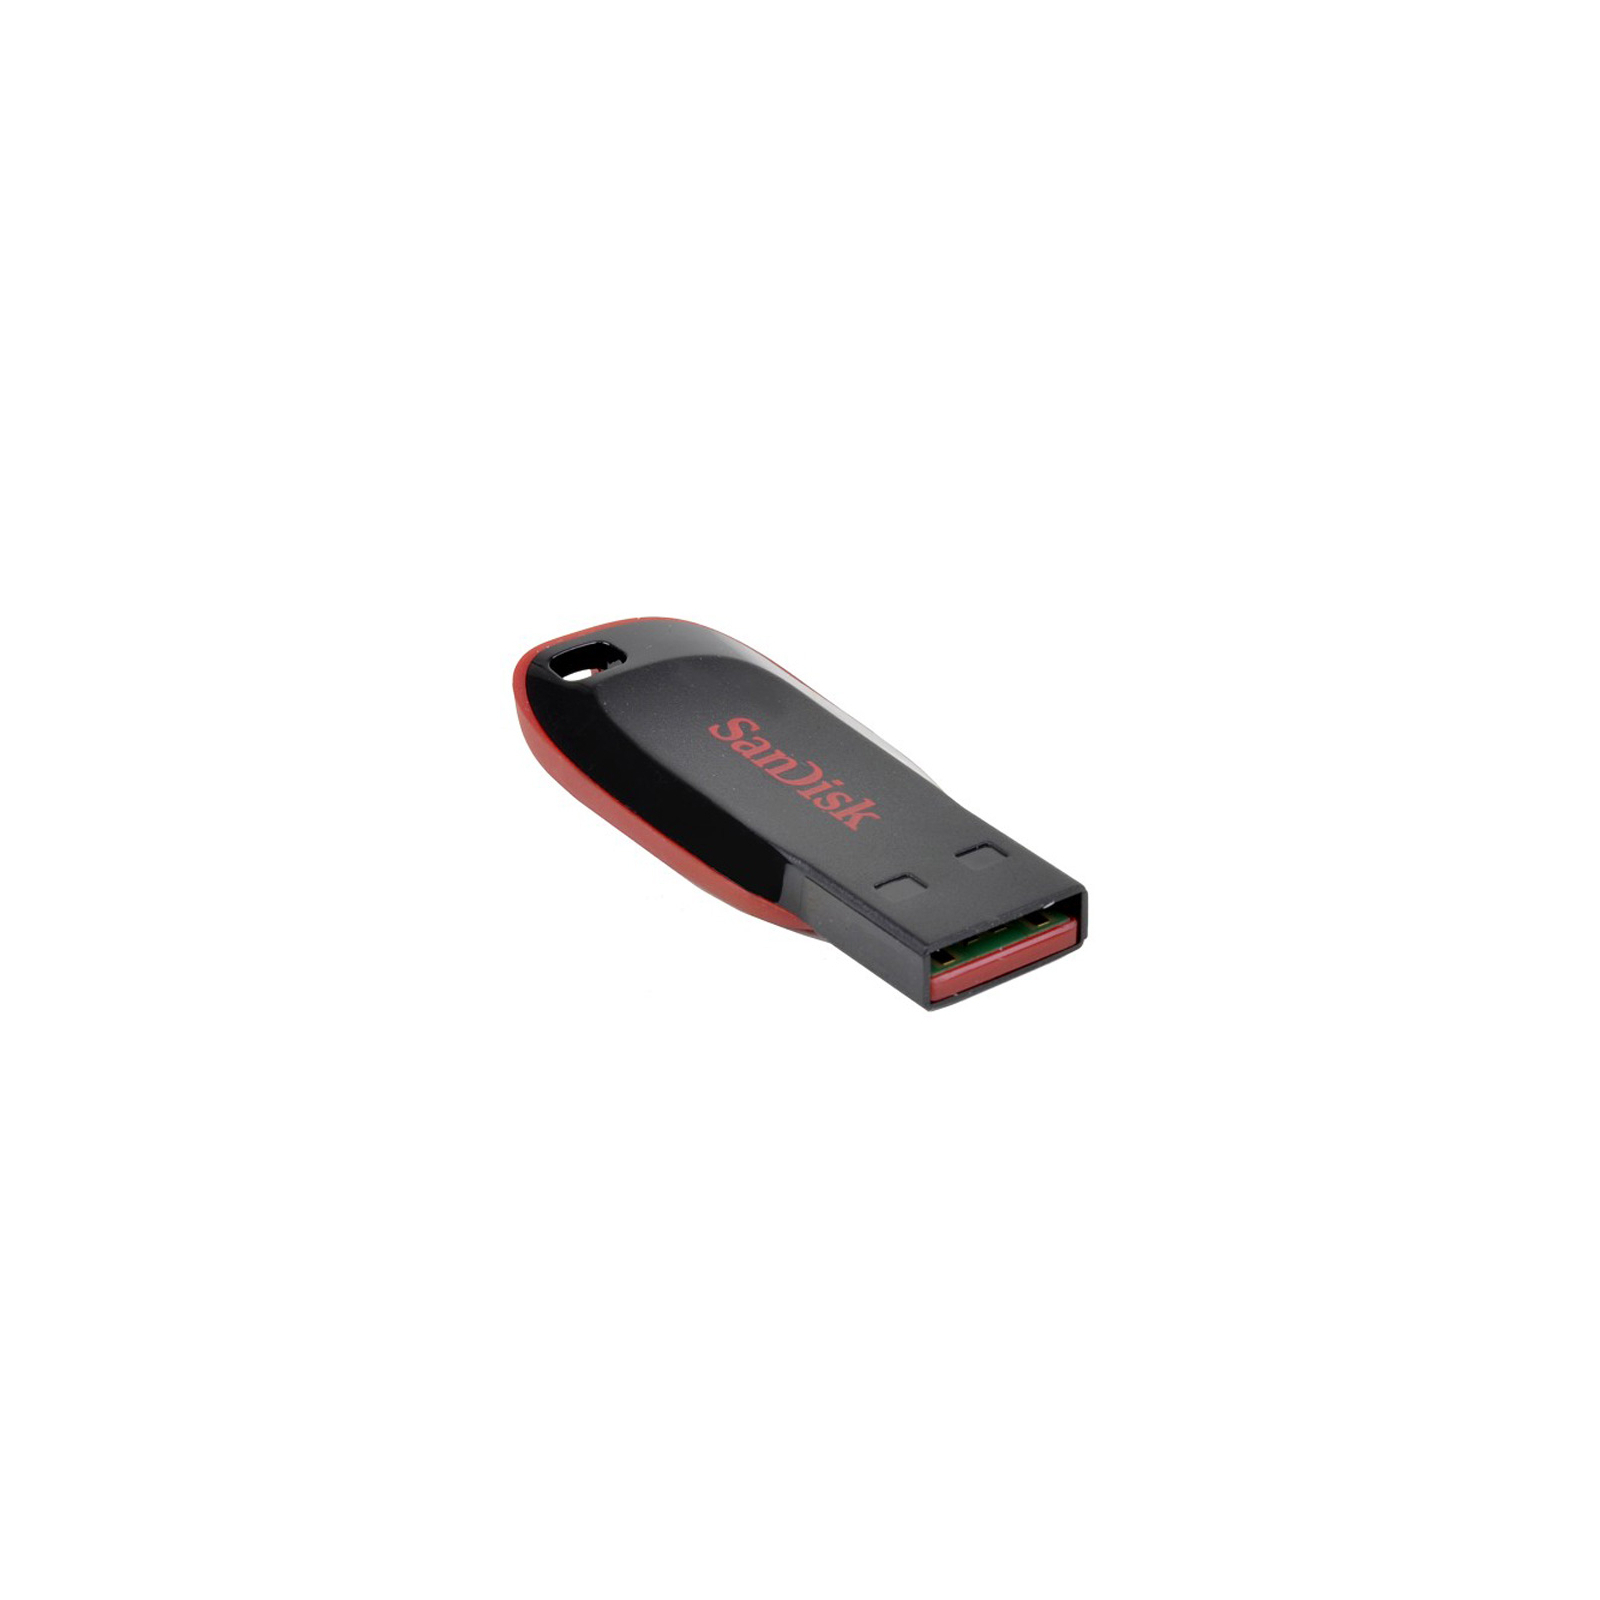 USB флеш накопитель SanDisk 16GB Cruzer Blade Green USB 2.0 (SDCZ50C-016G-B35GE) изображение 3